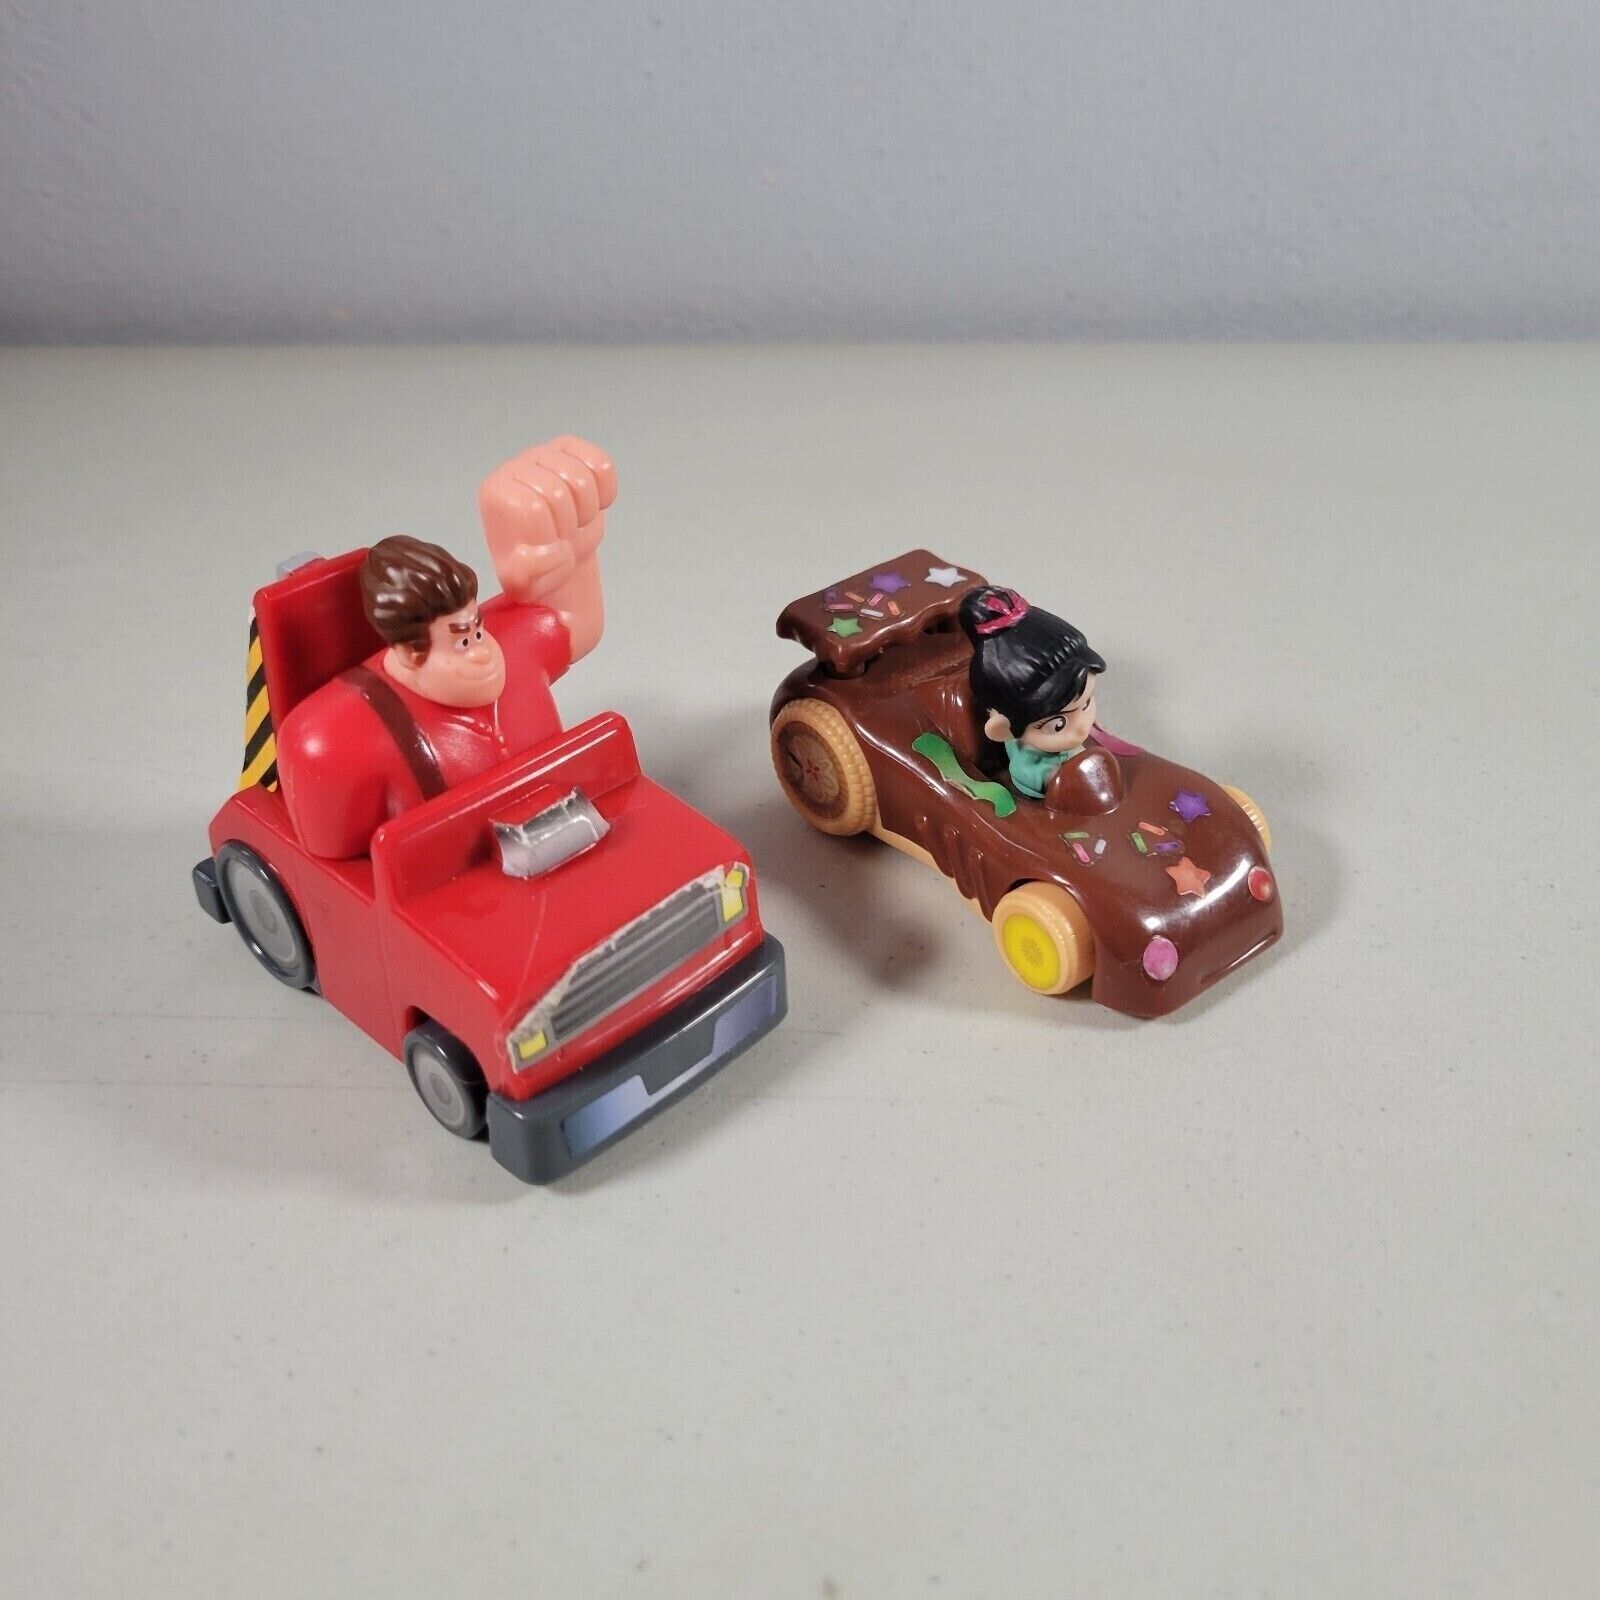 Wreck It Ralph Car Lot Racer Car and Penelope Sugar Rush Race Toy 2018 McDonalds - $9.99